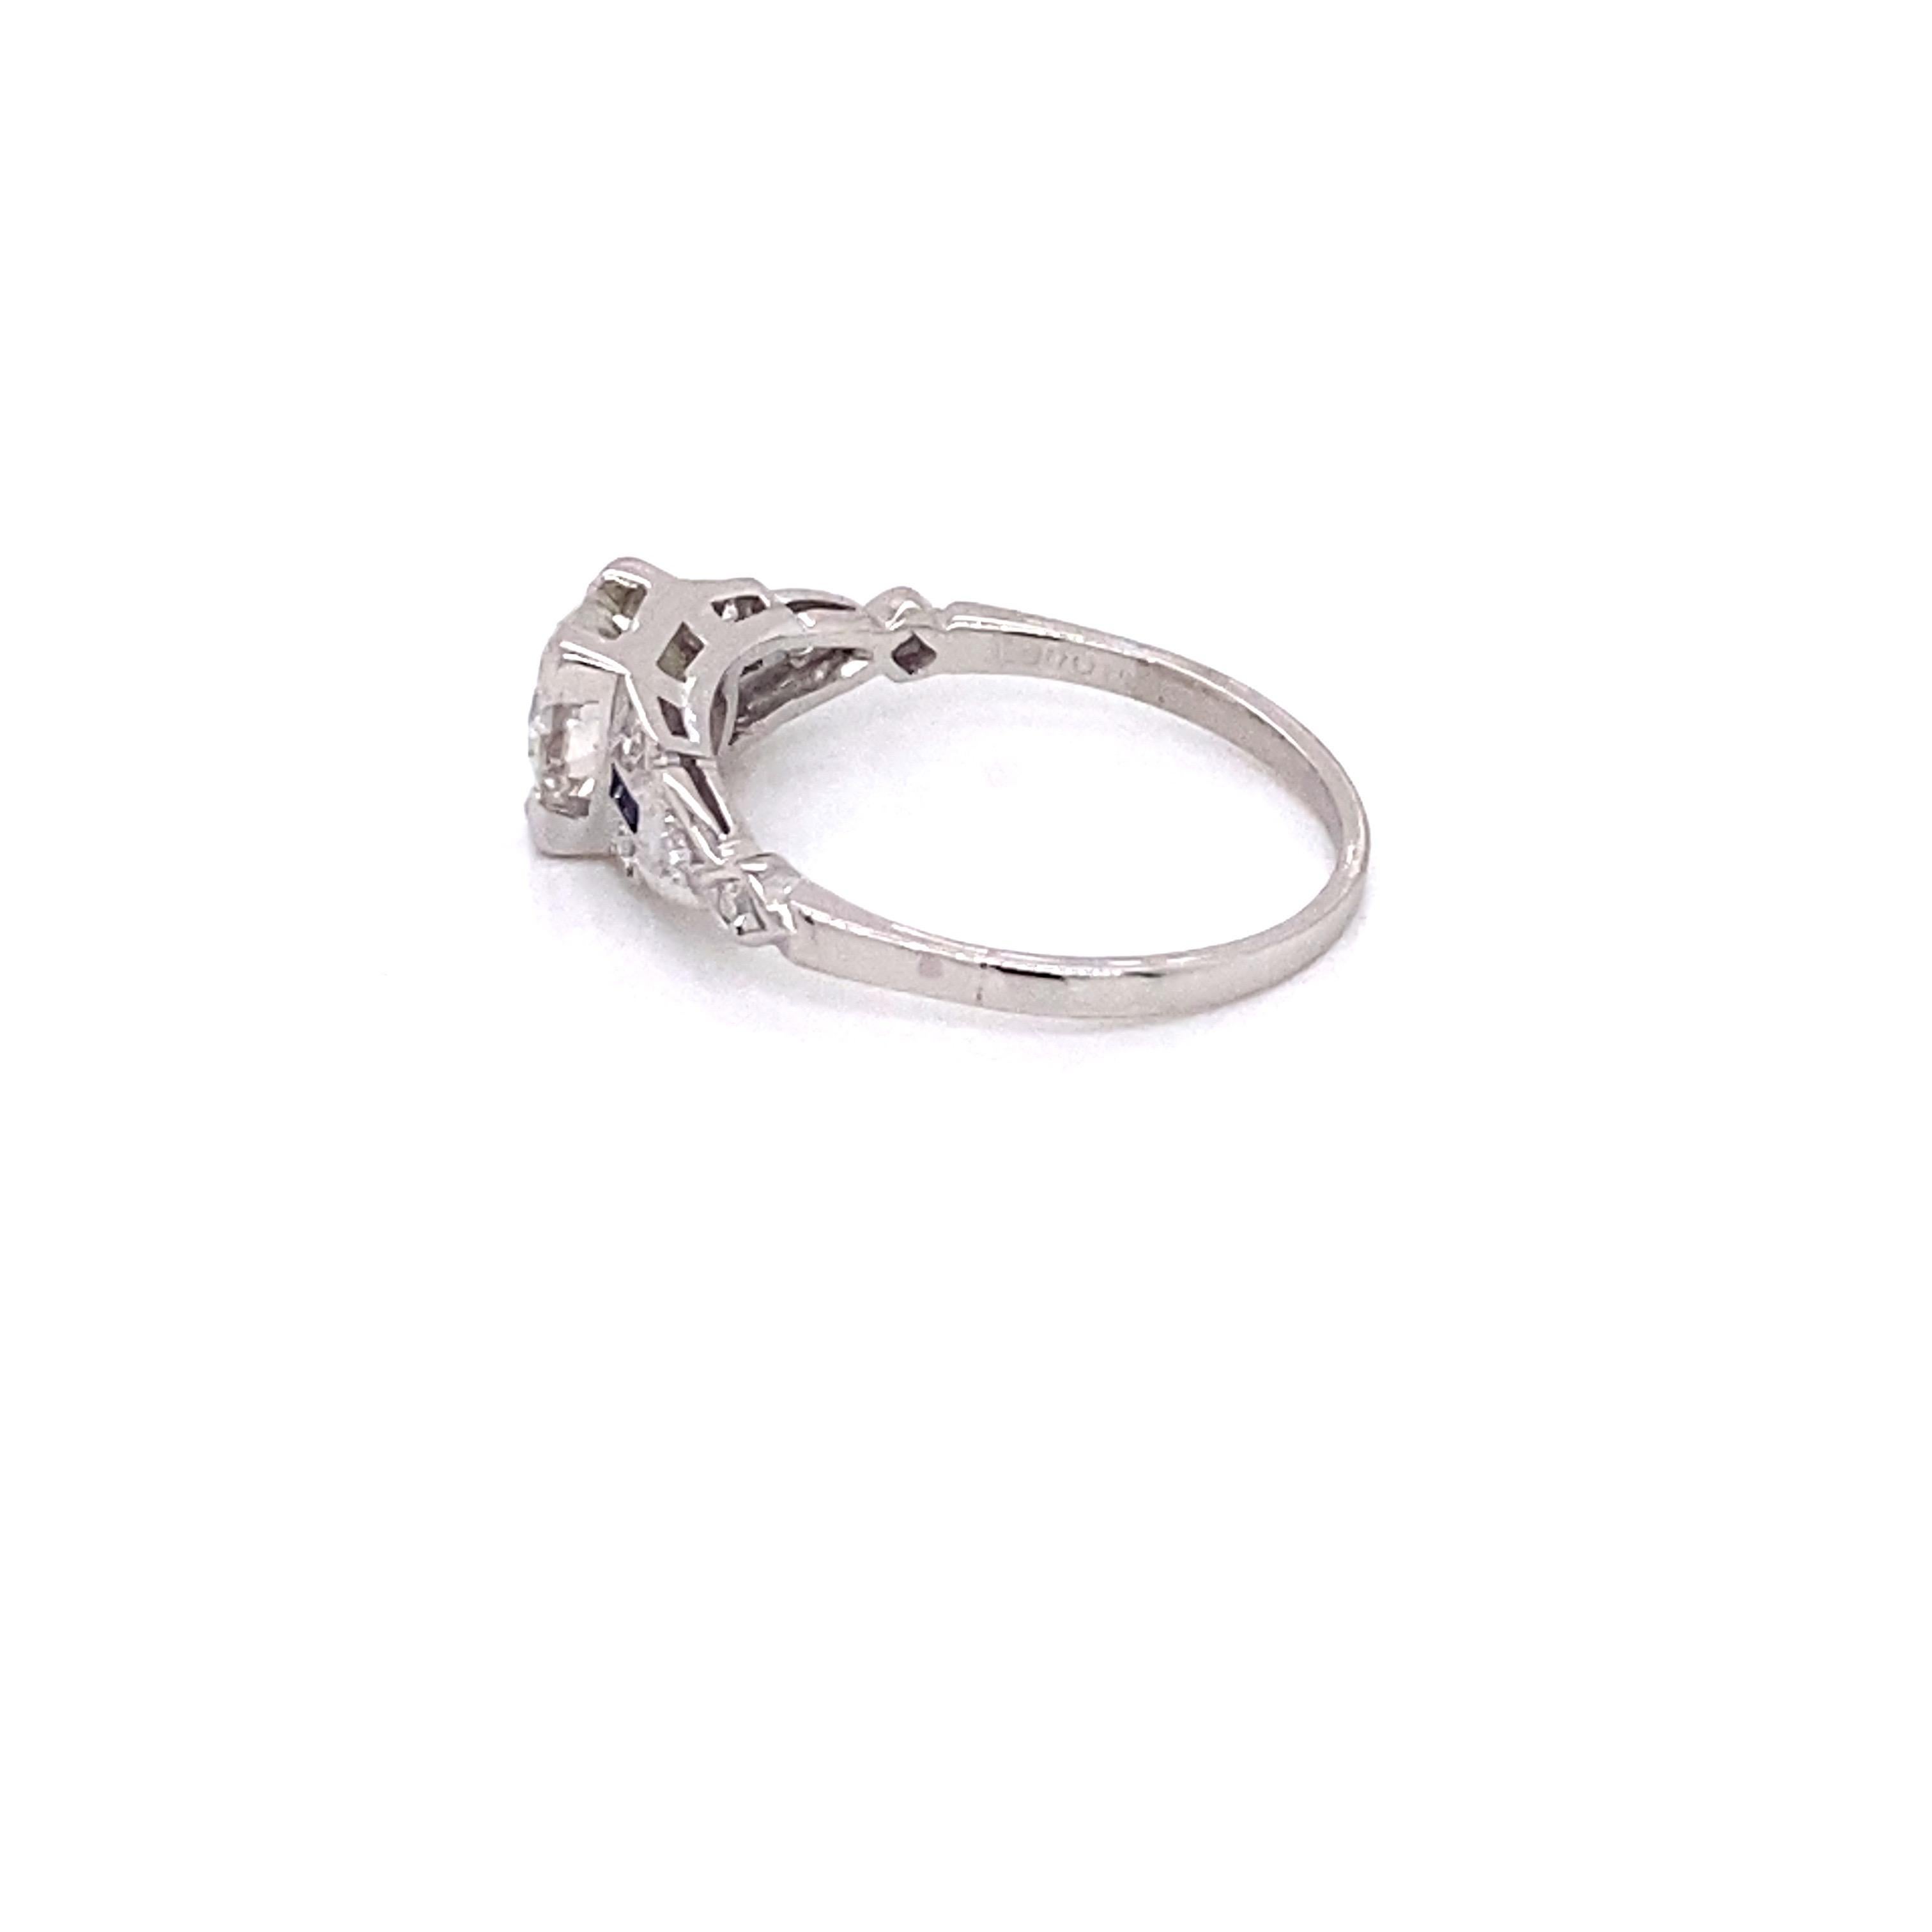 Vintage Art Deco European Cut Diamond Engagement Ring with Sapphires For Sale 2